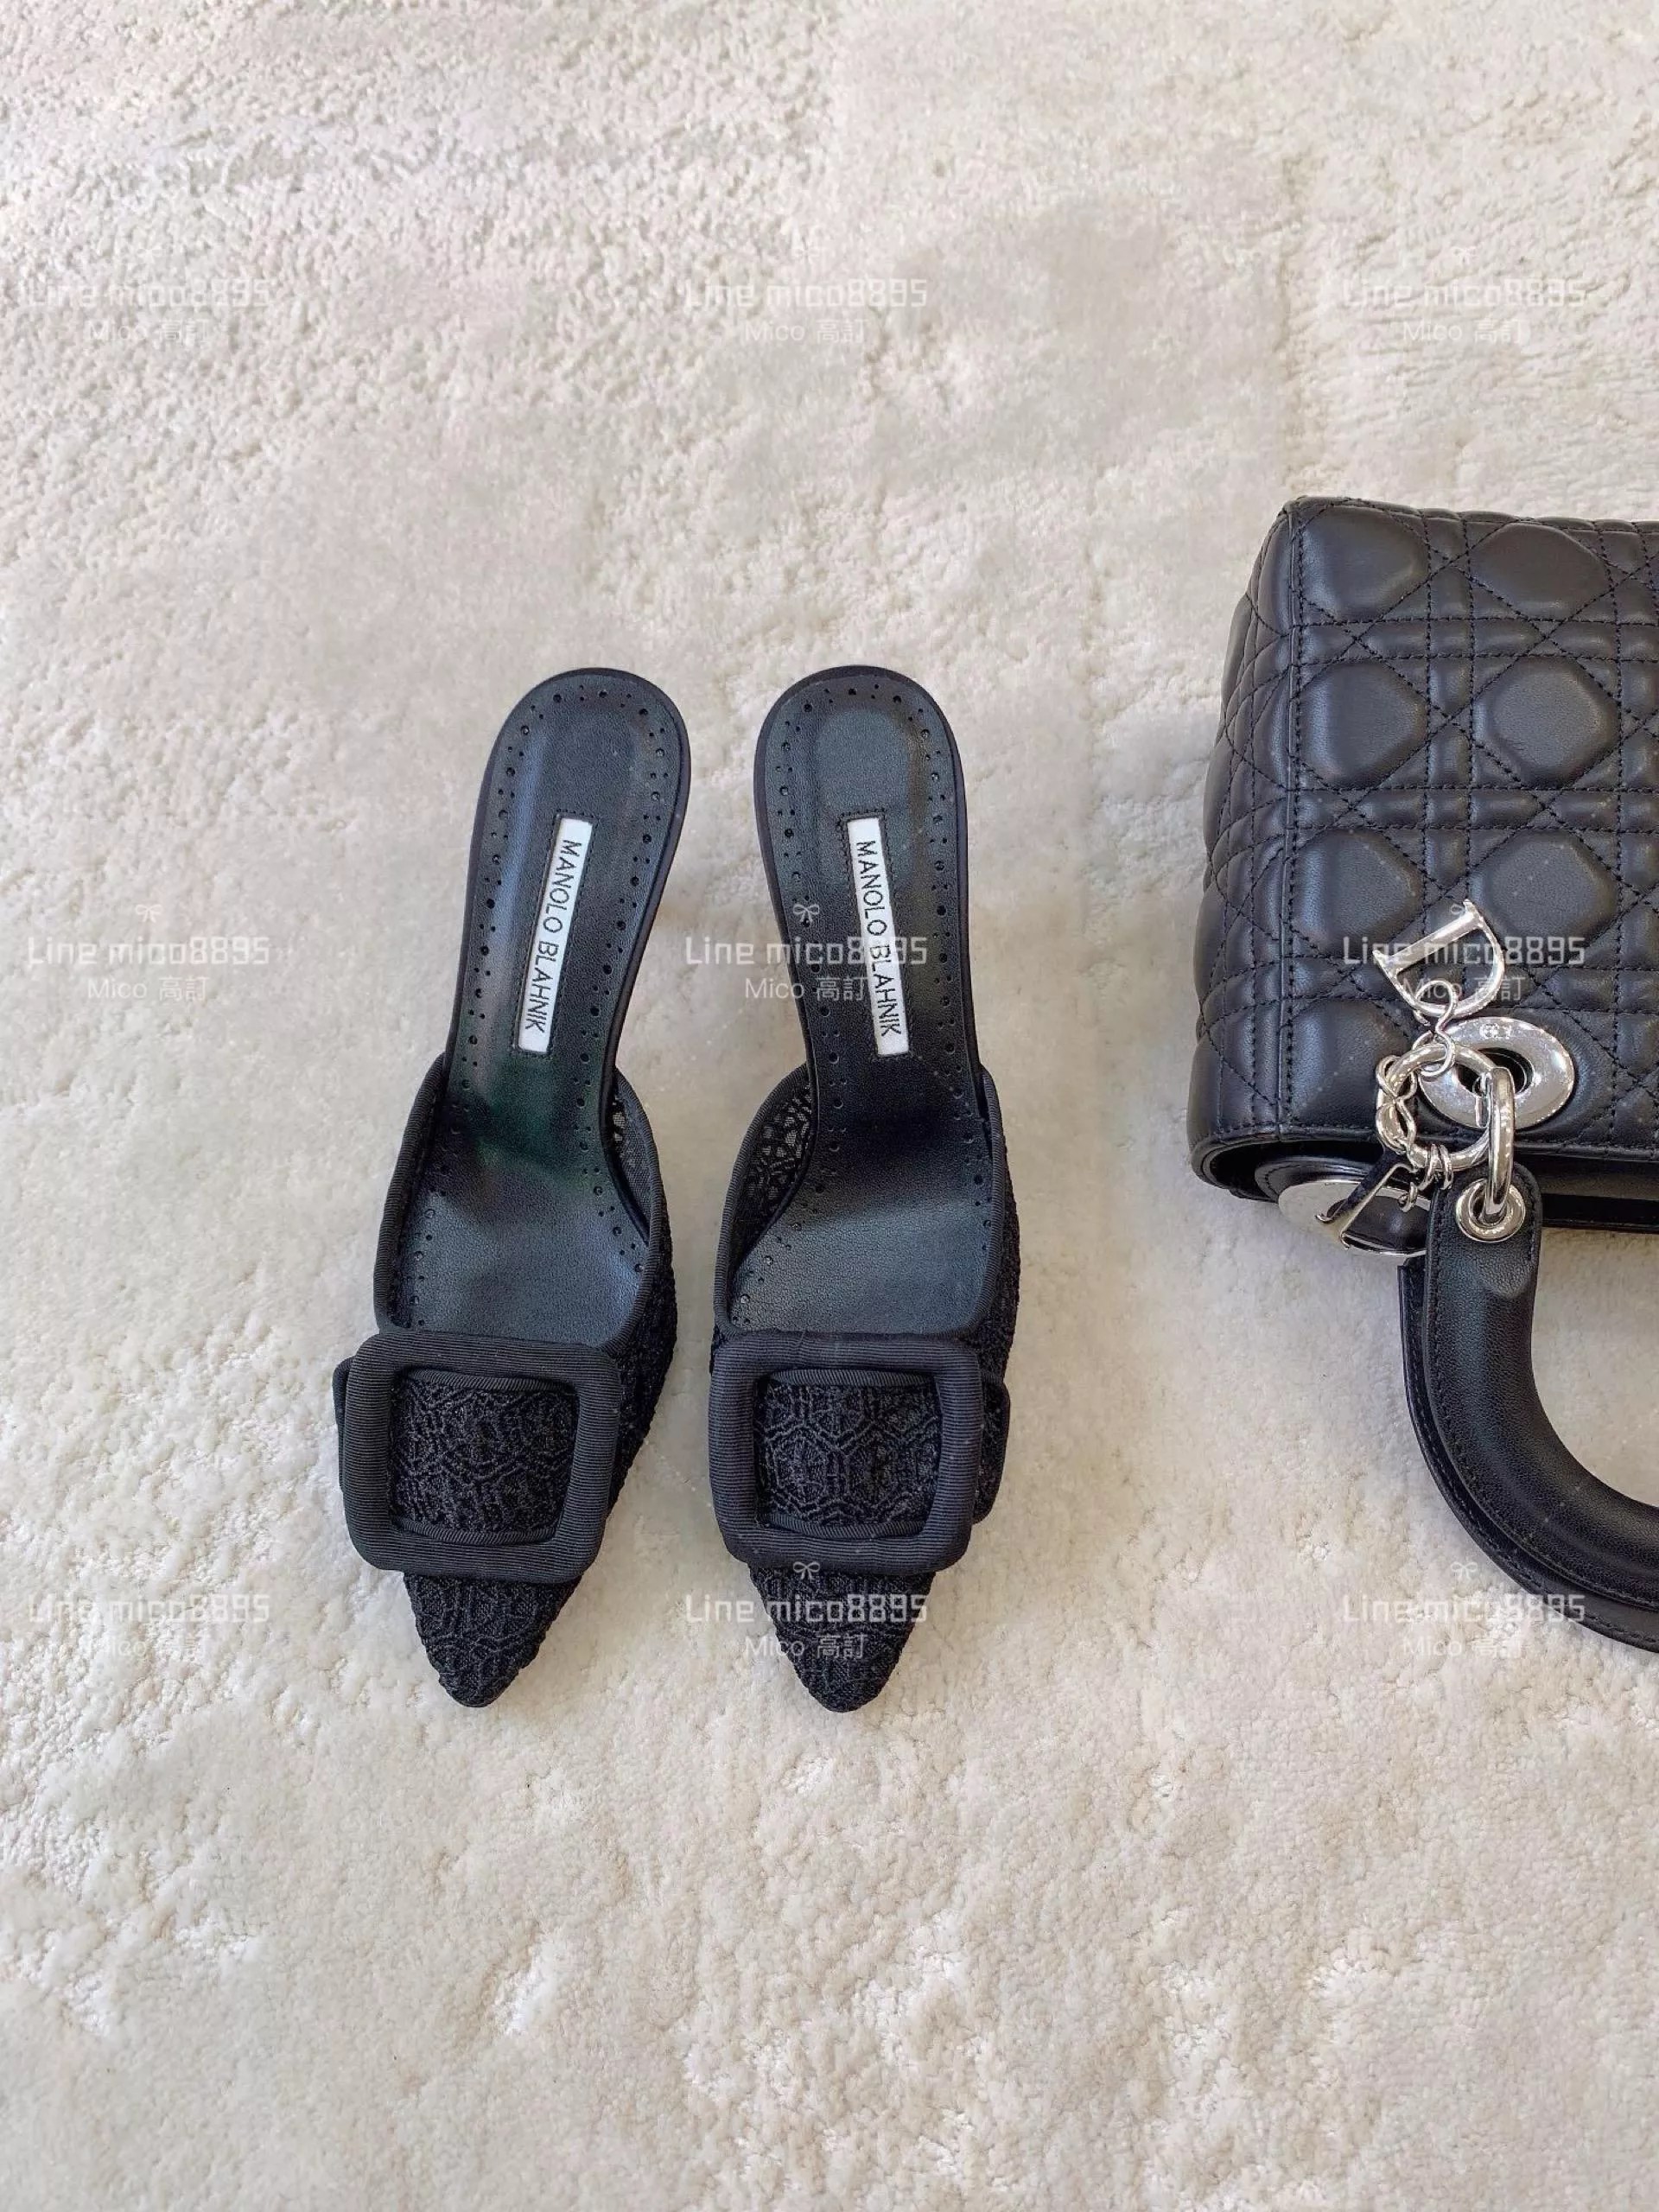 Manolo Blahnik 經典Maysale 系列 黑色蕾絲面 高跟涼鞋 拖鞋 跟鞋 跟高6.5cm 34-42